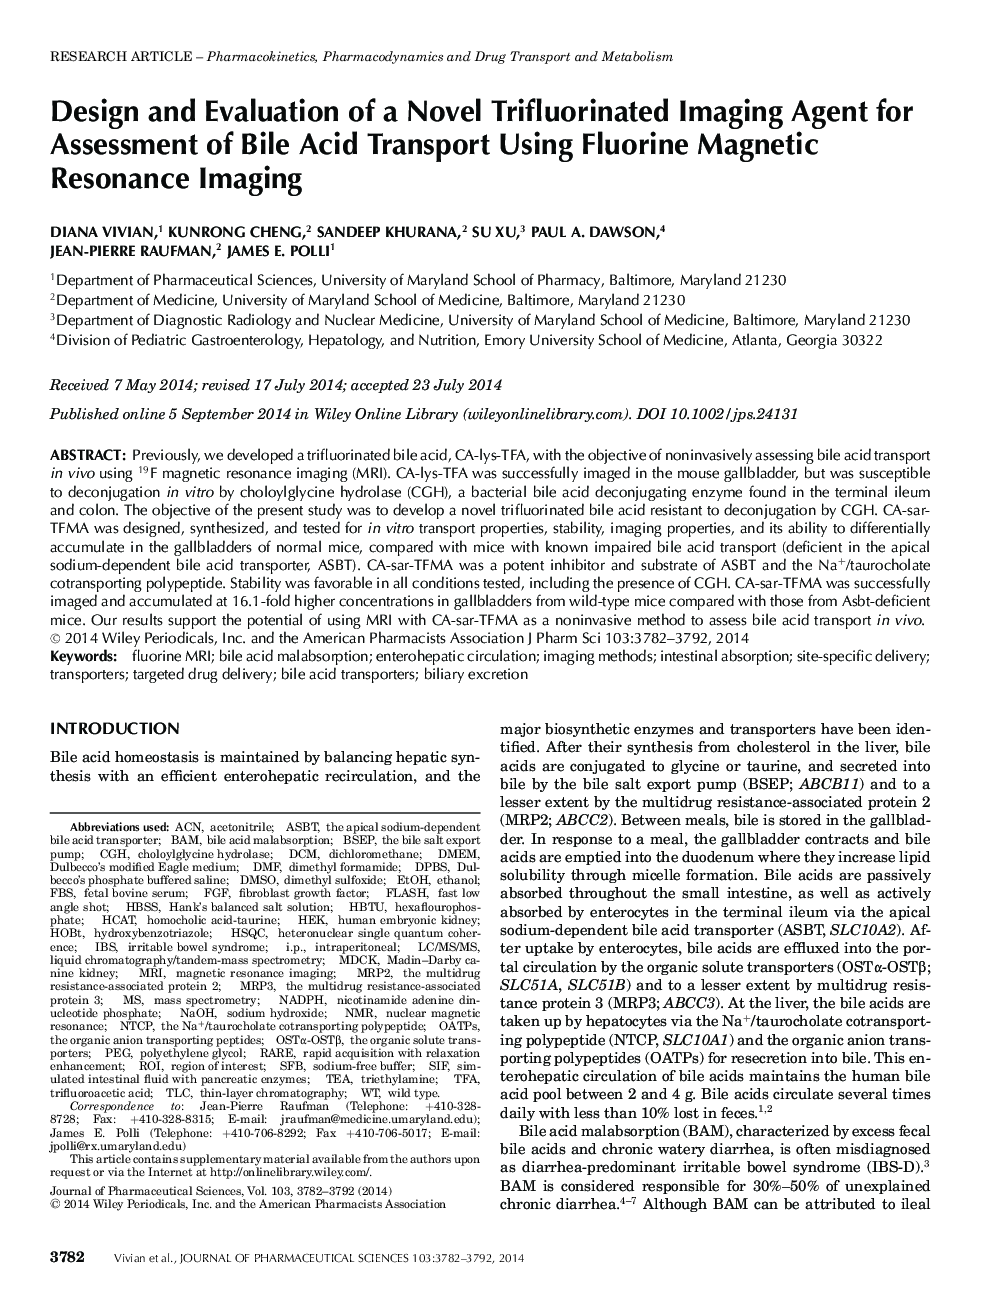 Design and Evaluation of a Novel Trifluorinated Imaging Agent for Assessment of Bile Acid Transport Using Fluorine Magnetic Resonance Imaging